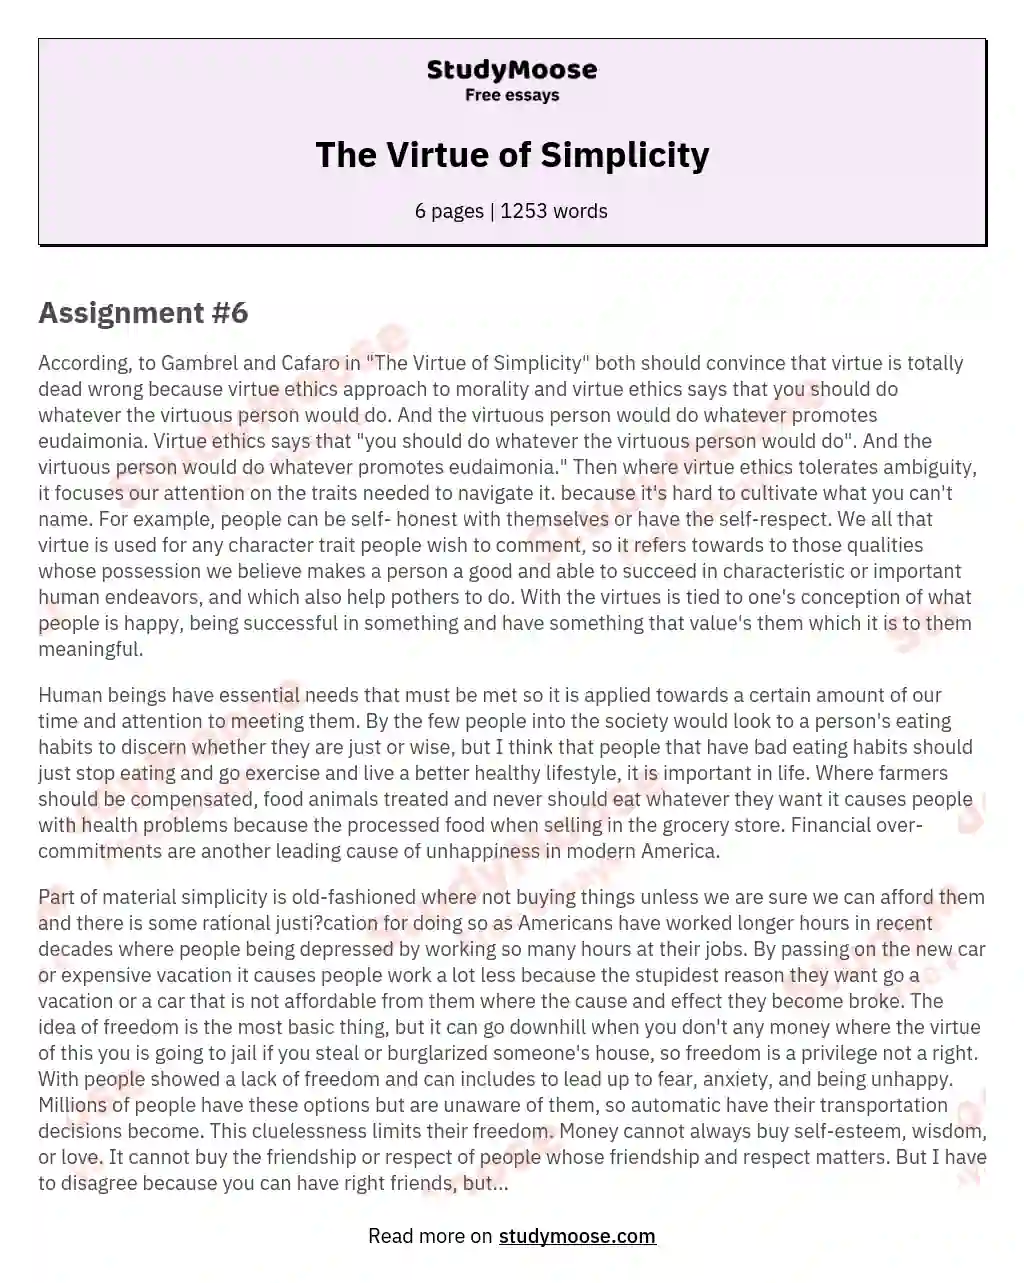 The Virtue of Simplicity essay